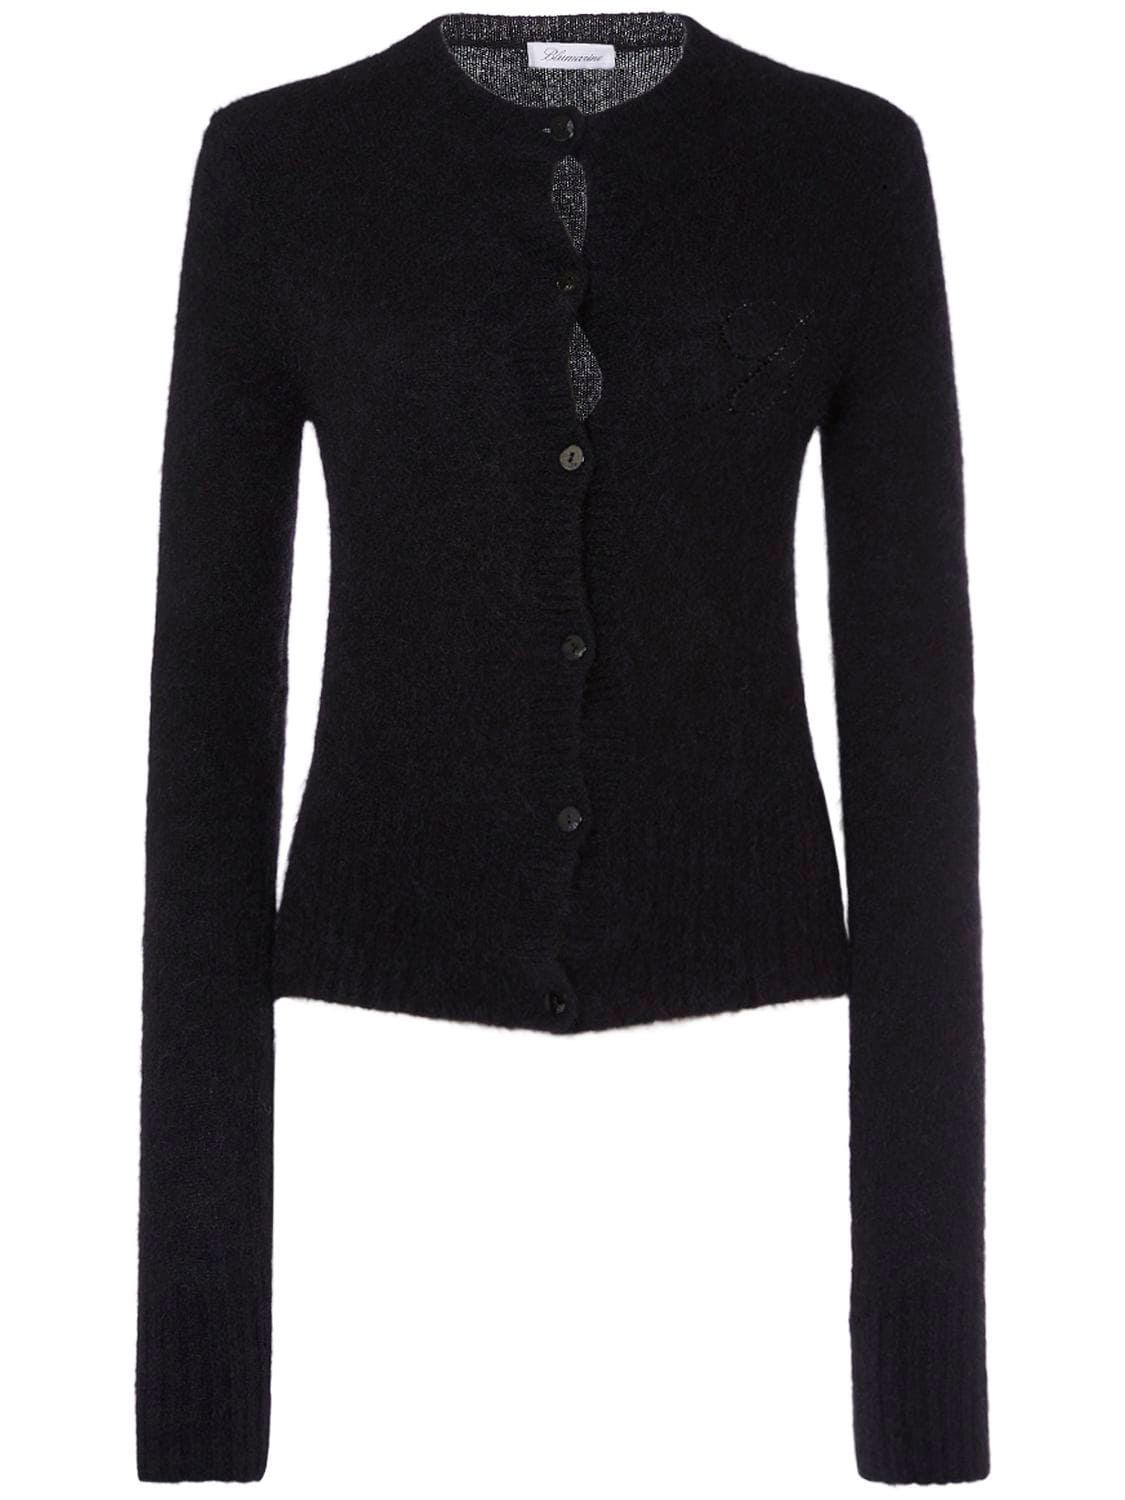 Blumarine Alpaca Blend Knit Top & Cardigan In Black